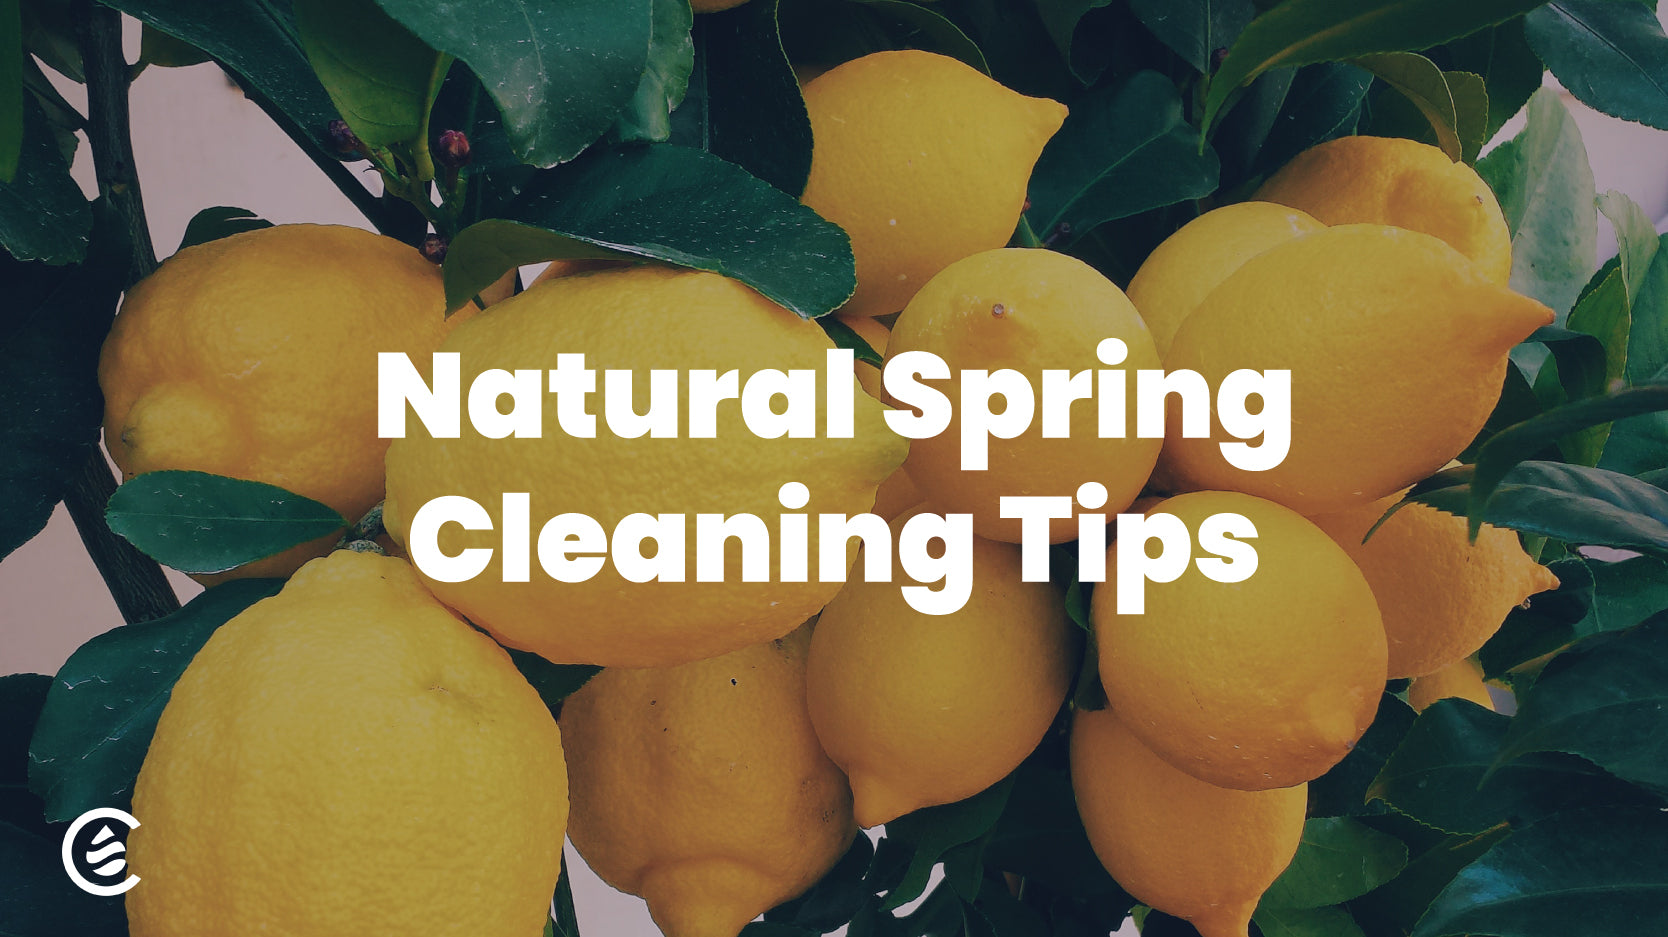 Cedarcide Blog Post Image, Natural Spring Cleaning Tips